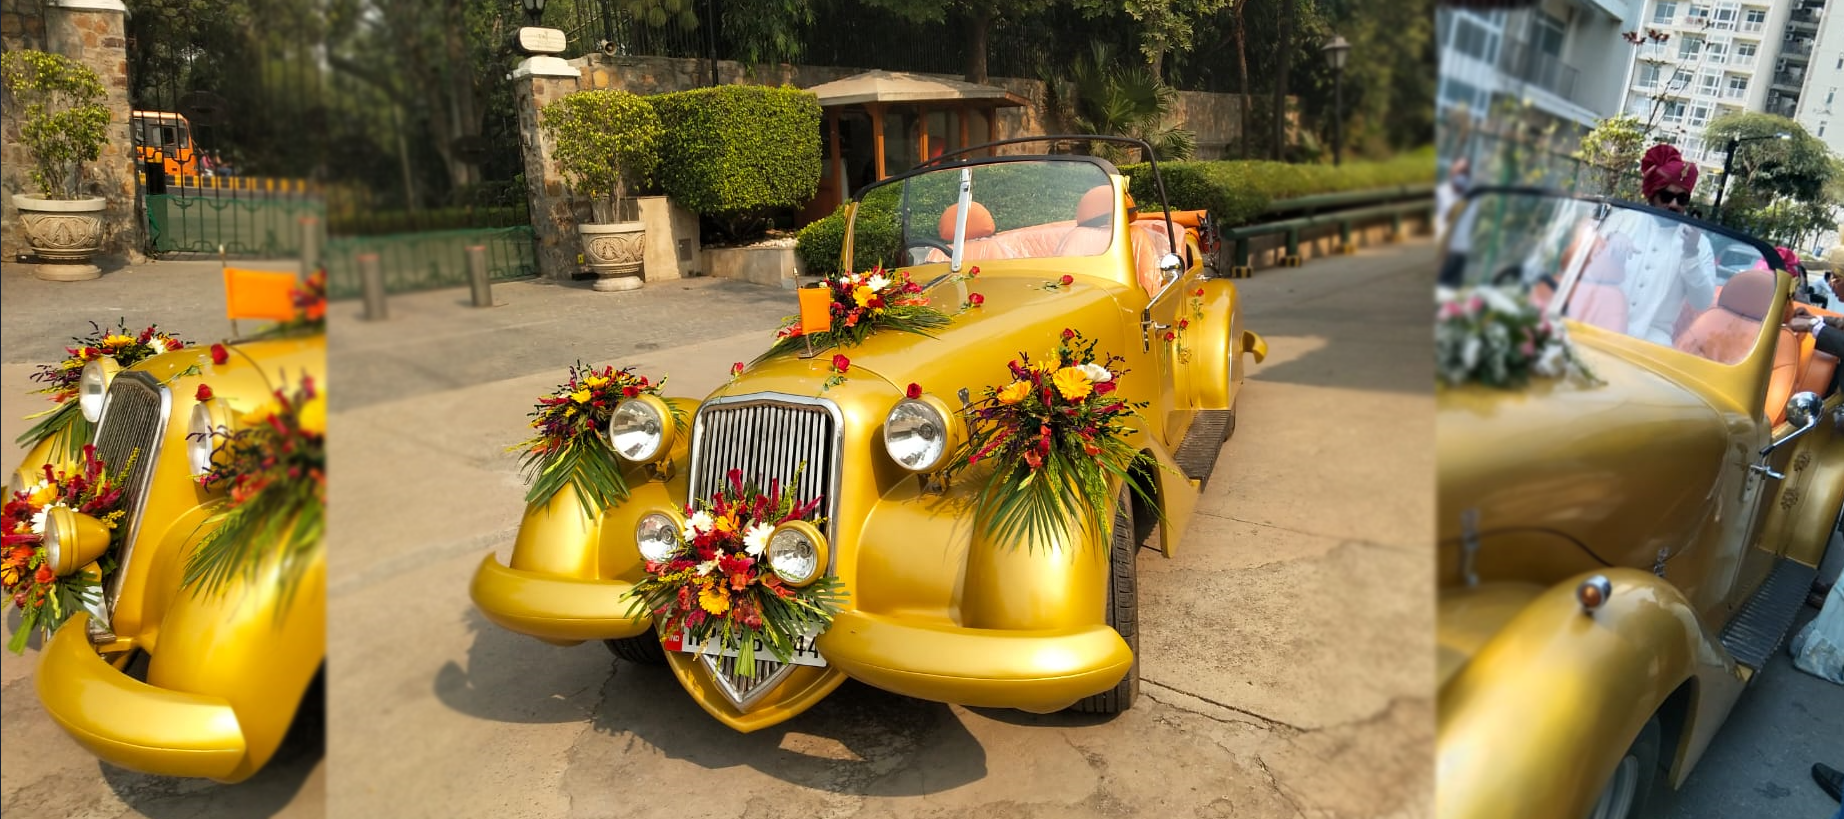 Decorated Golden Morgan 1955 Vintage Car